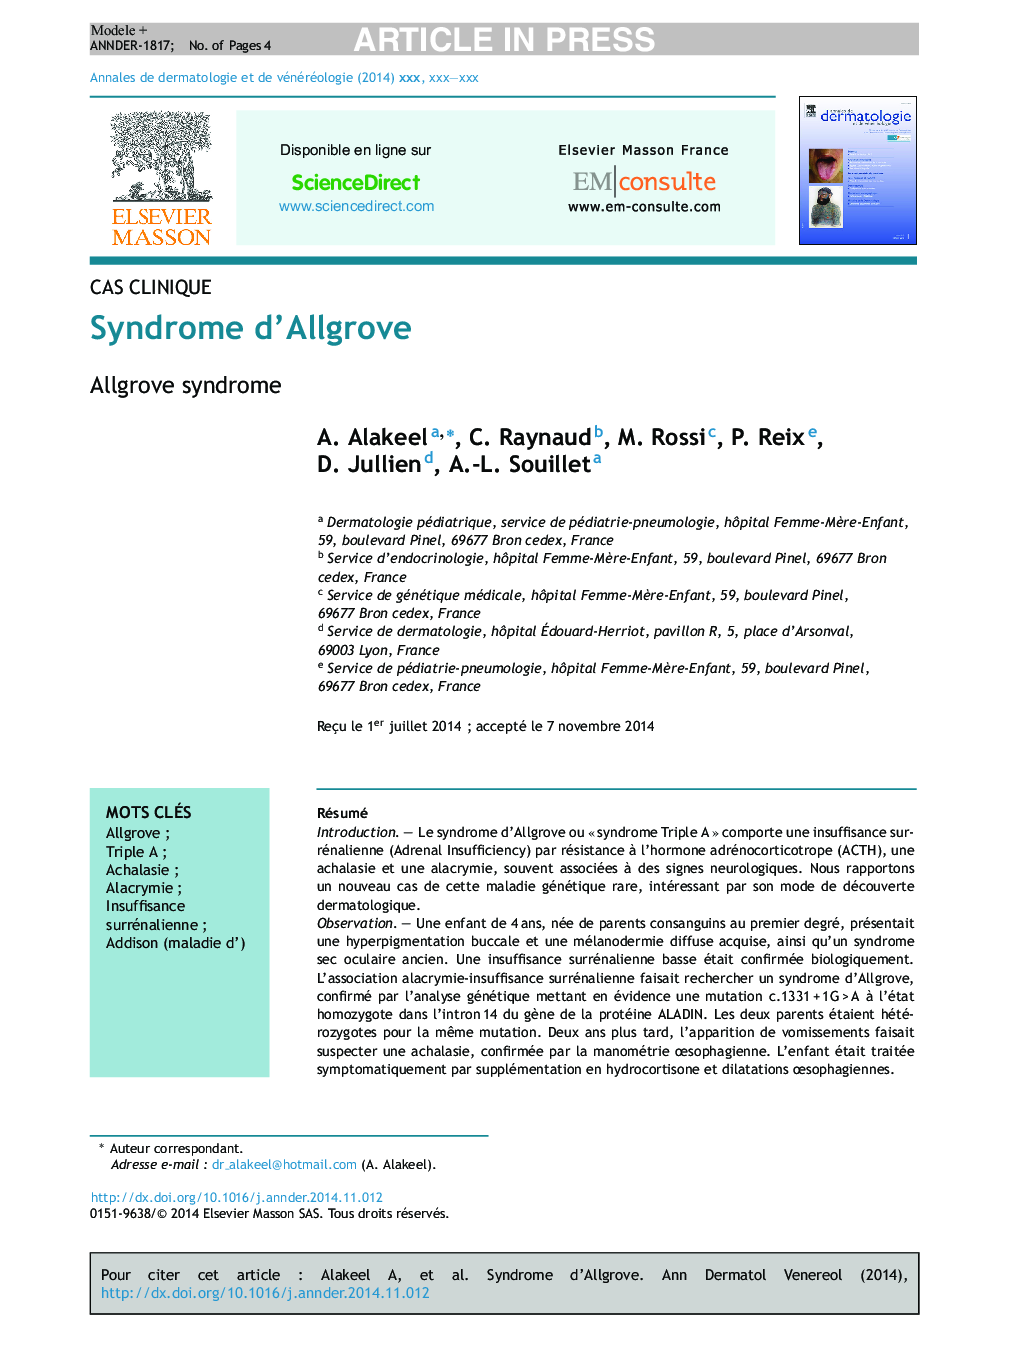 Syndrome d'Allgrove